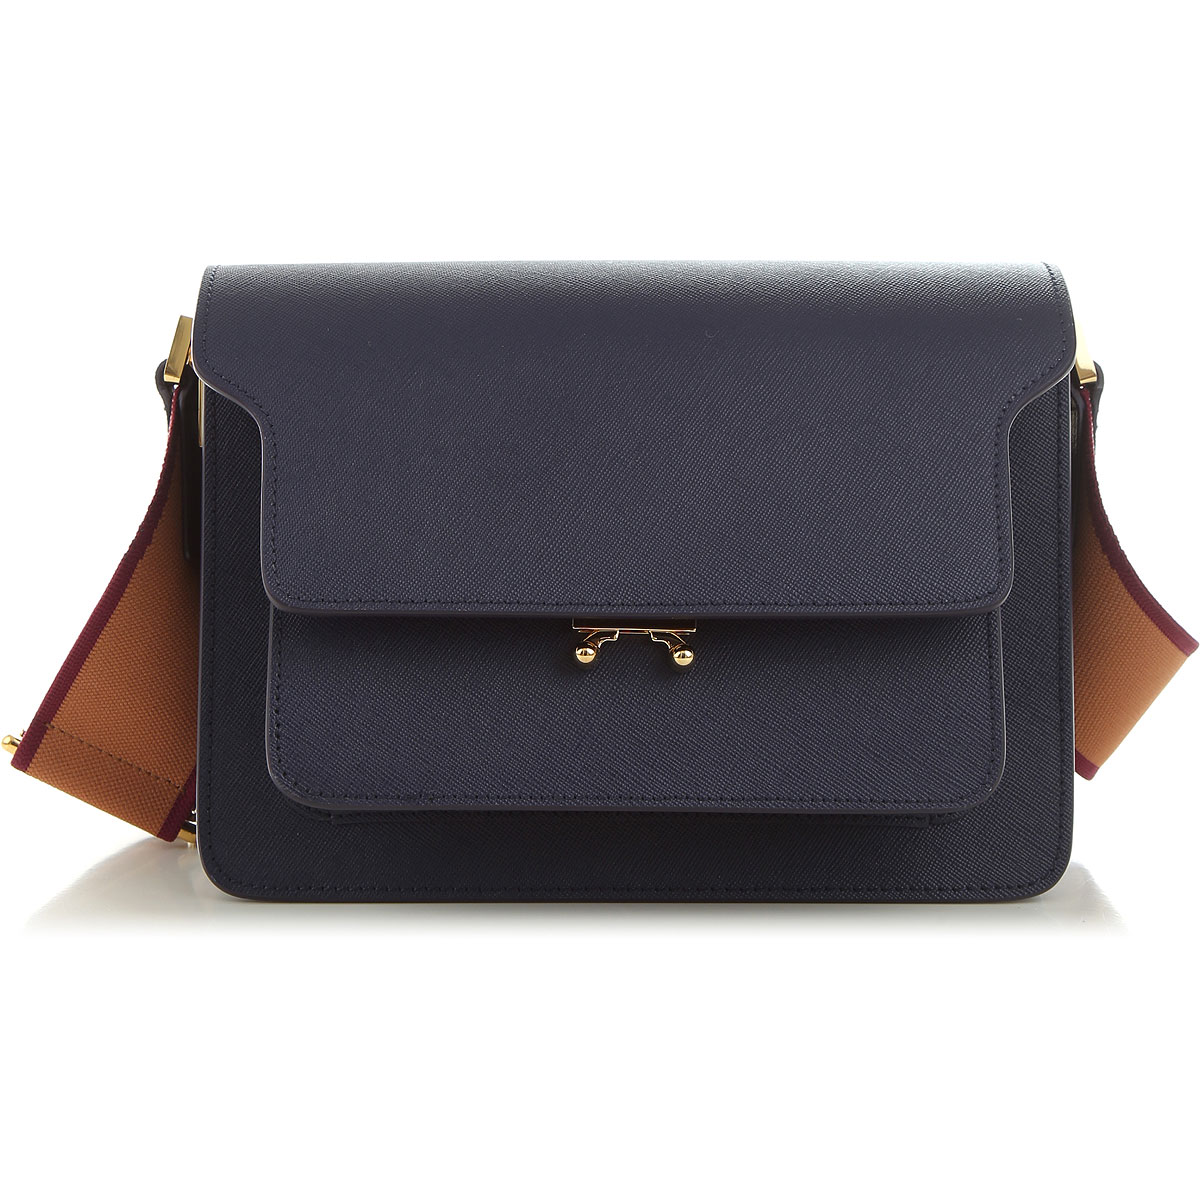 Handbags Marni, Style code: sbmpn09t07-lv520-z5608